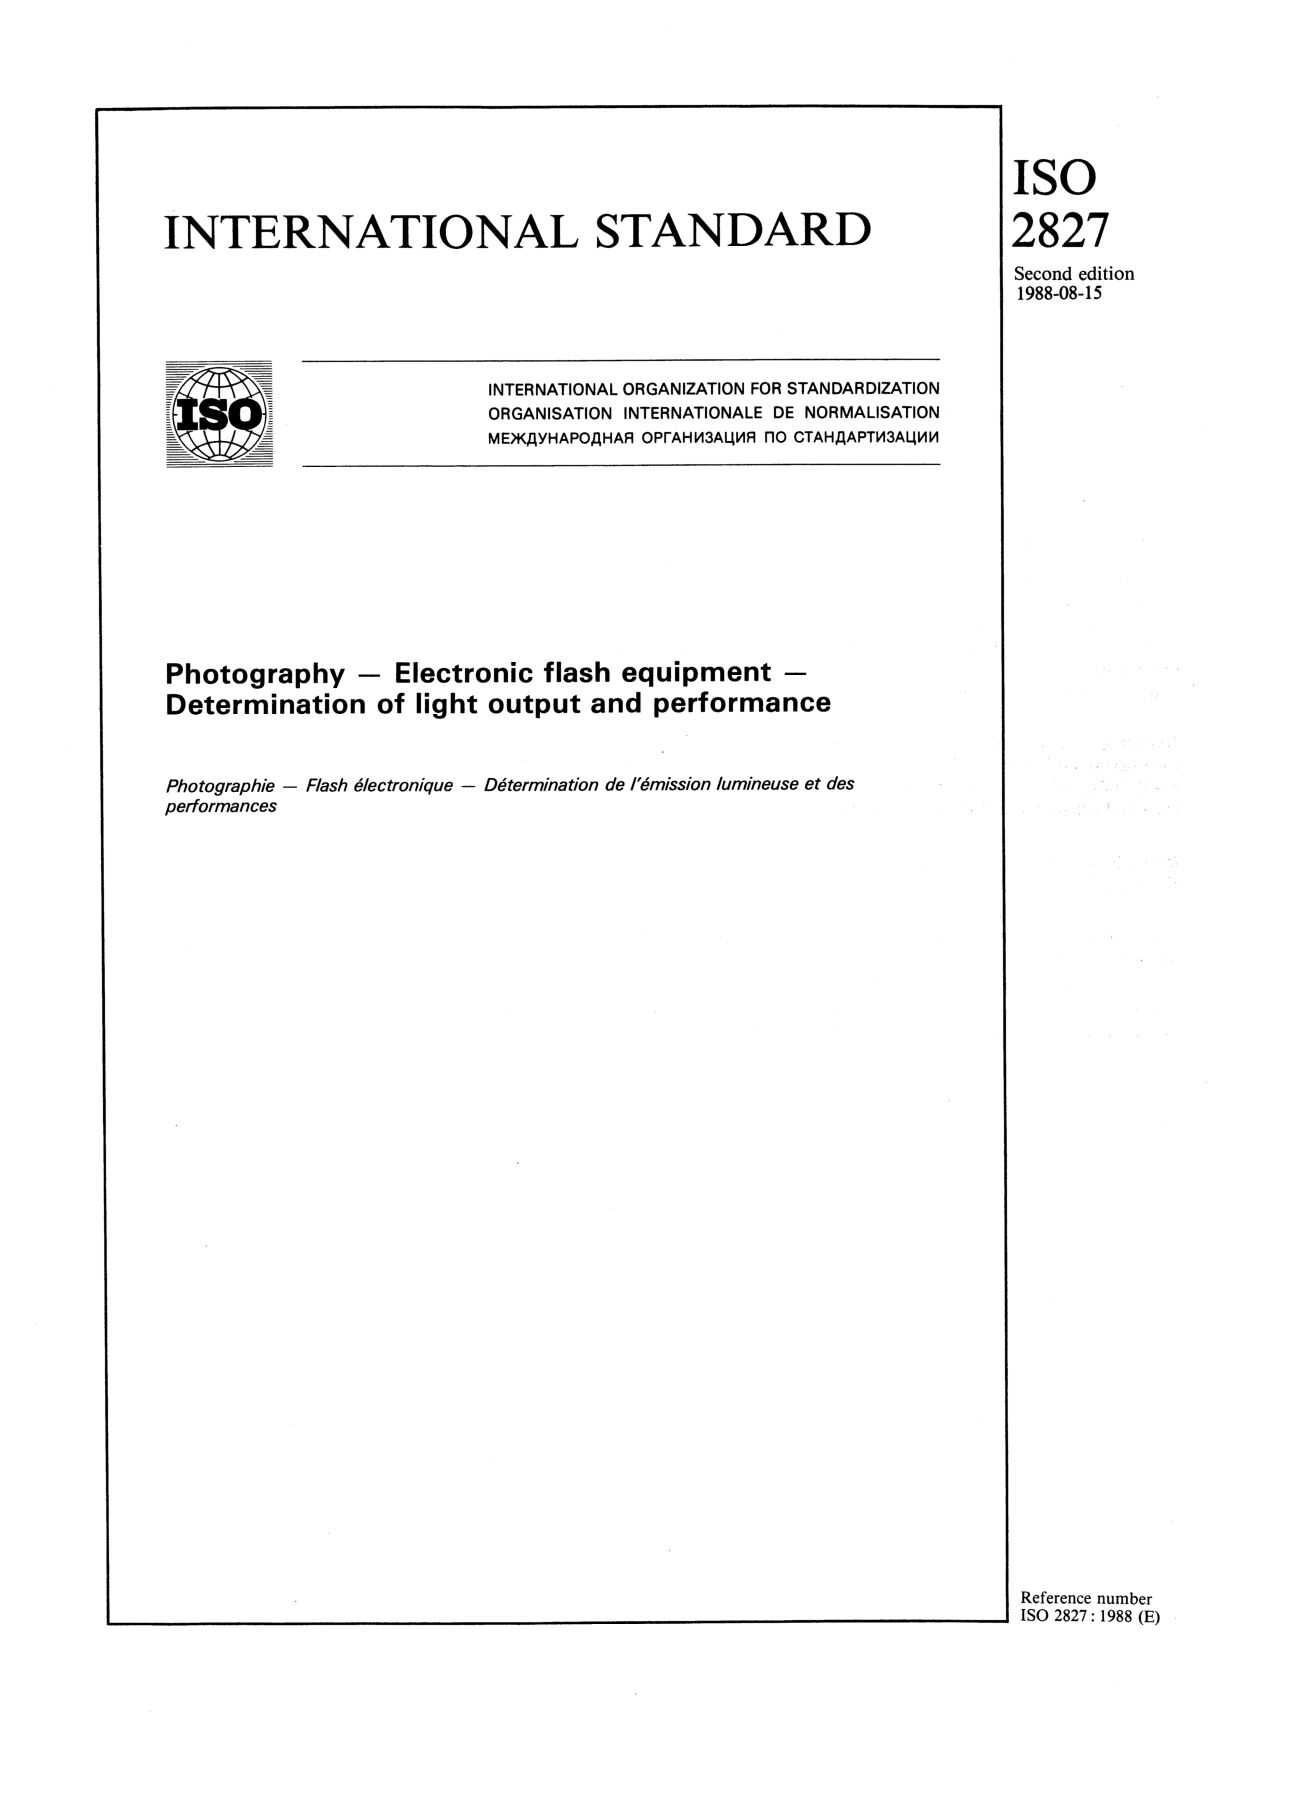 ISO 2827:1988封面图